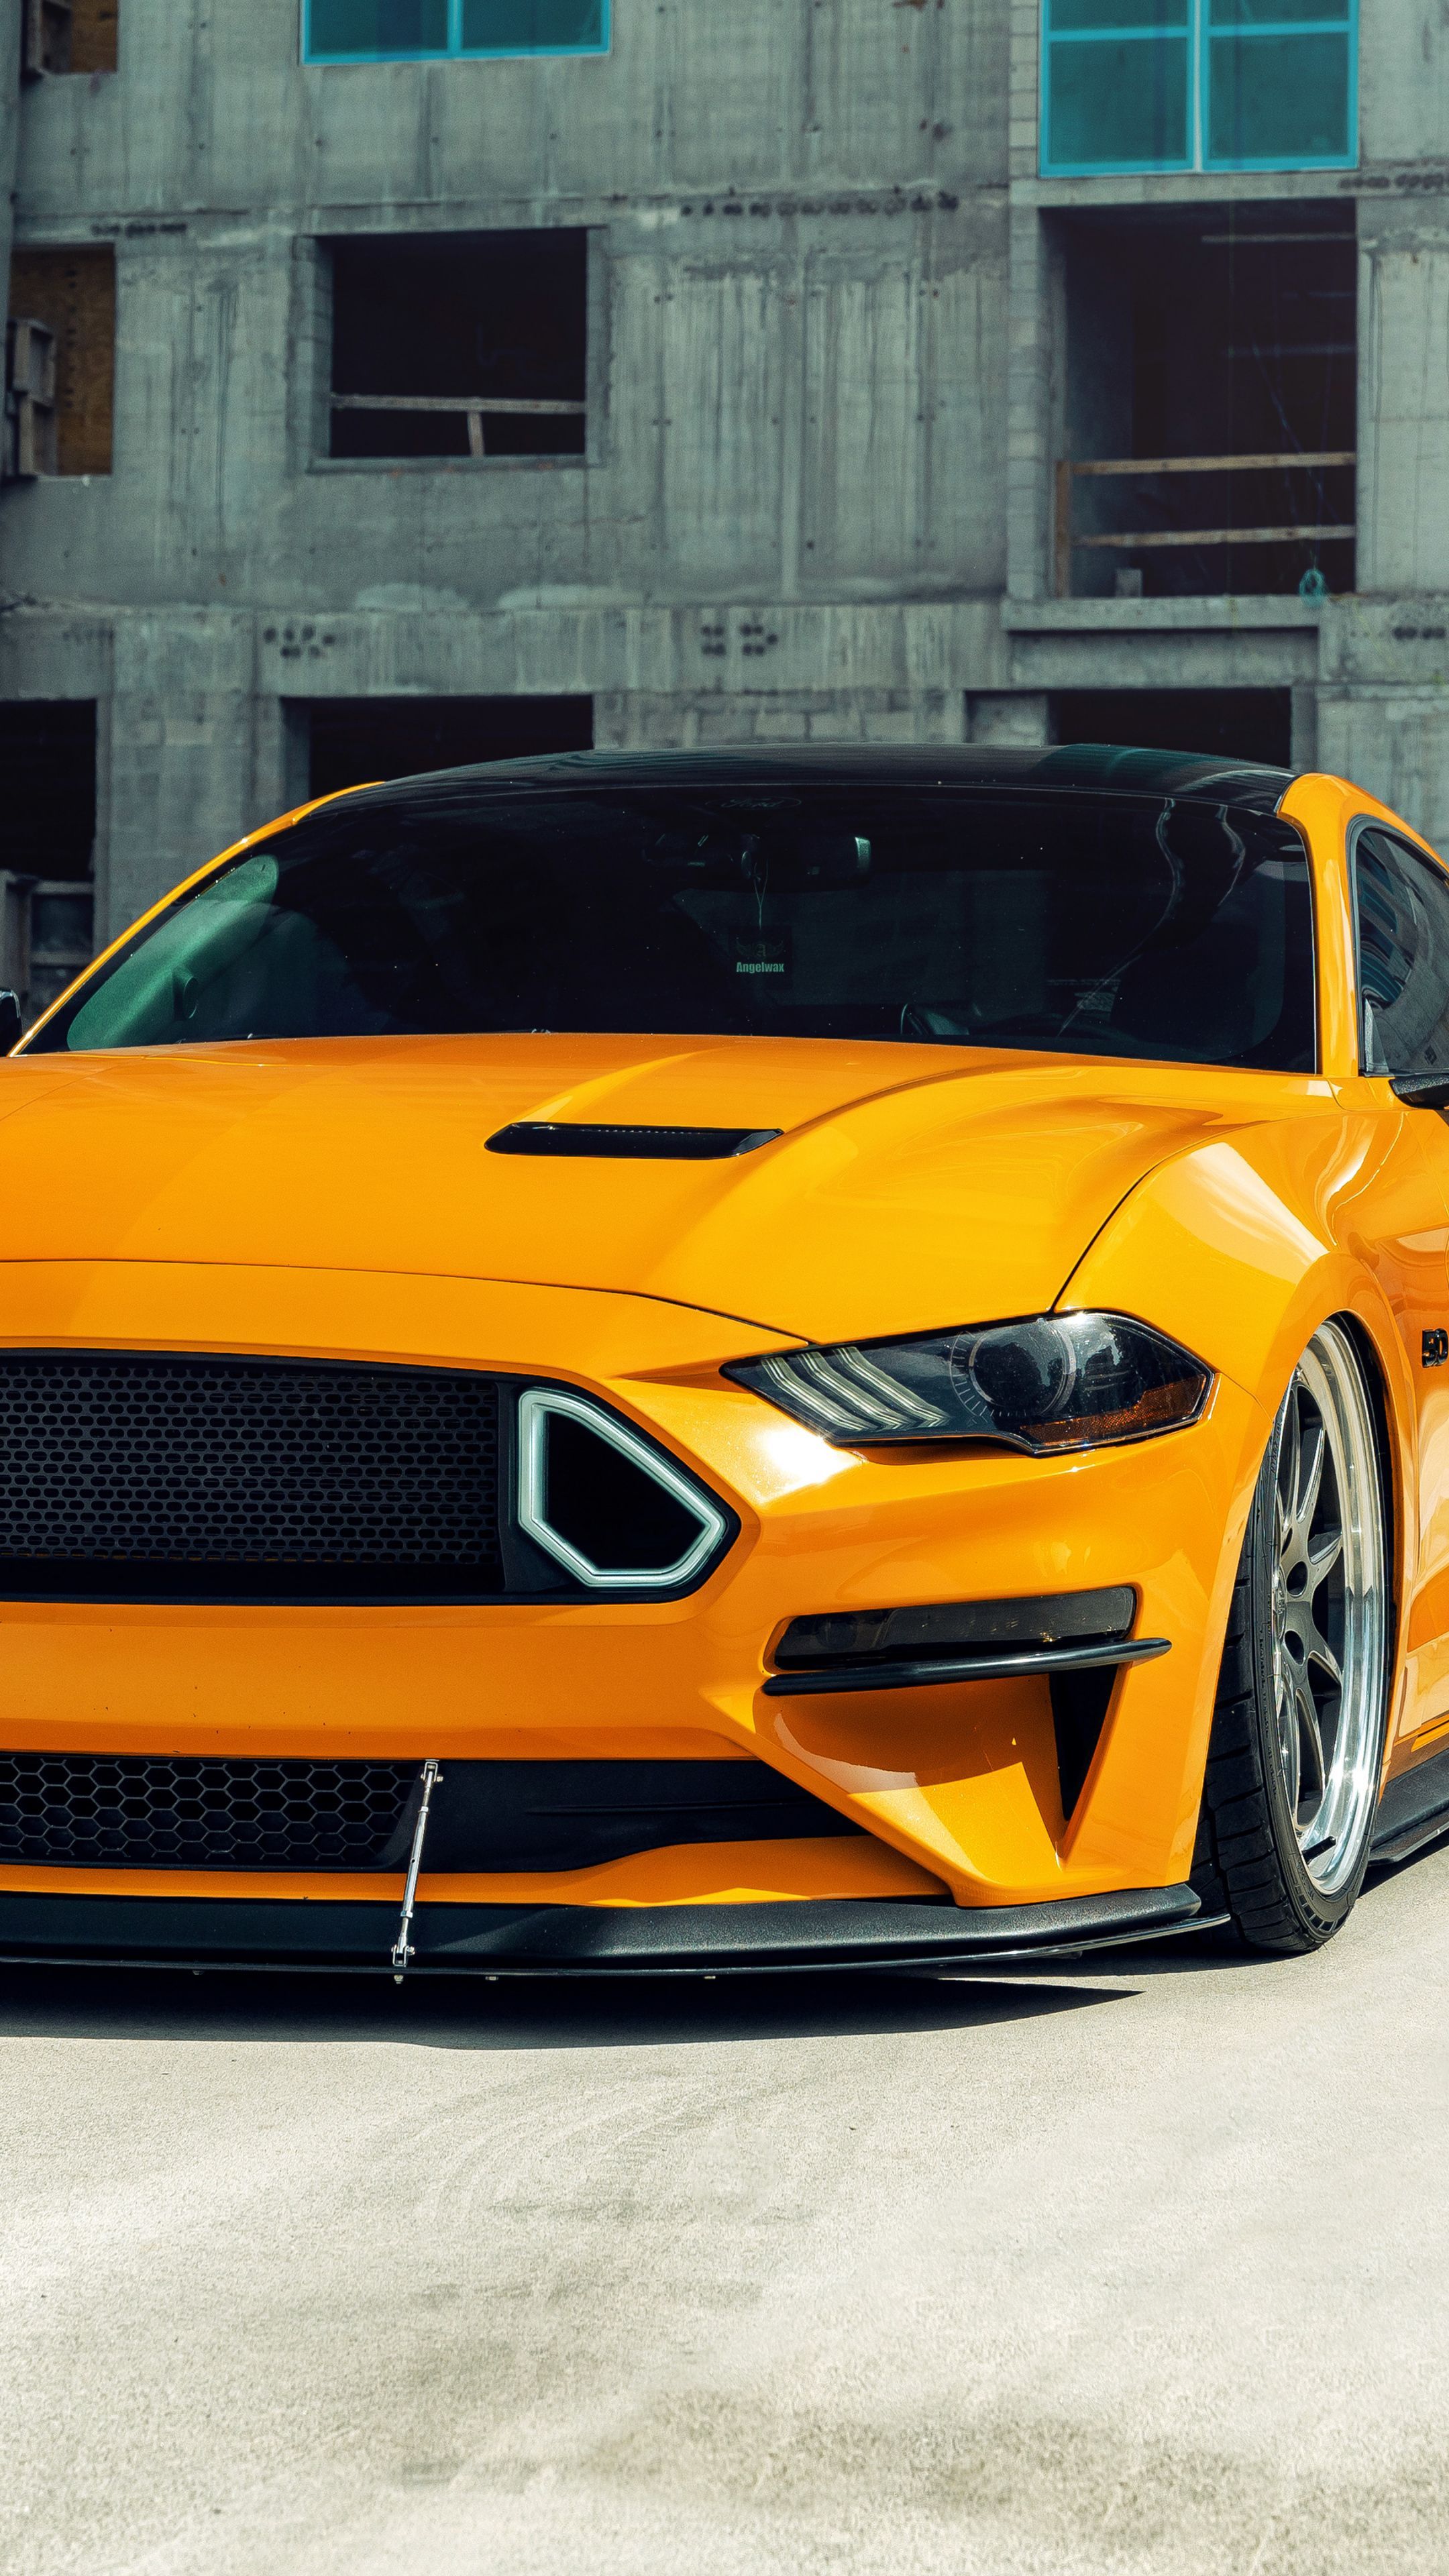 Yellow Ford Mustang GT, 2020 wallpaper. Mustang gt, Ford mustang gt, Ford mustang